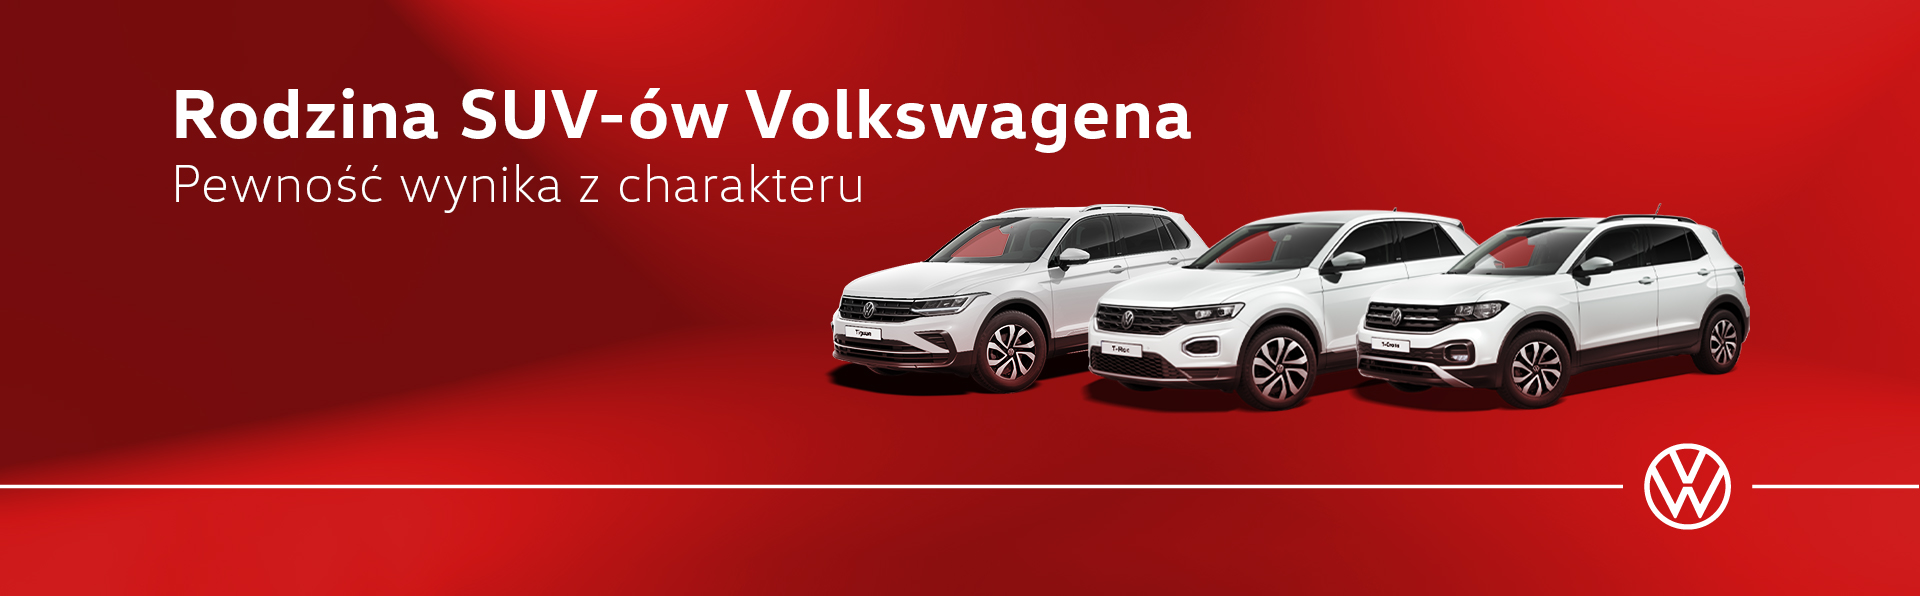 ZIMNY autoryzowany dealer Škoda i Volkswagen